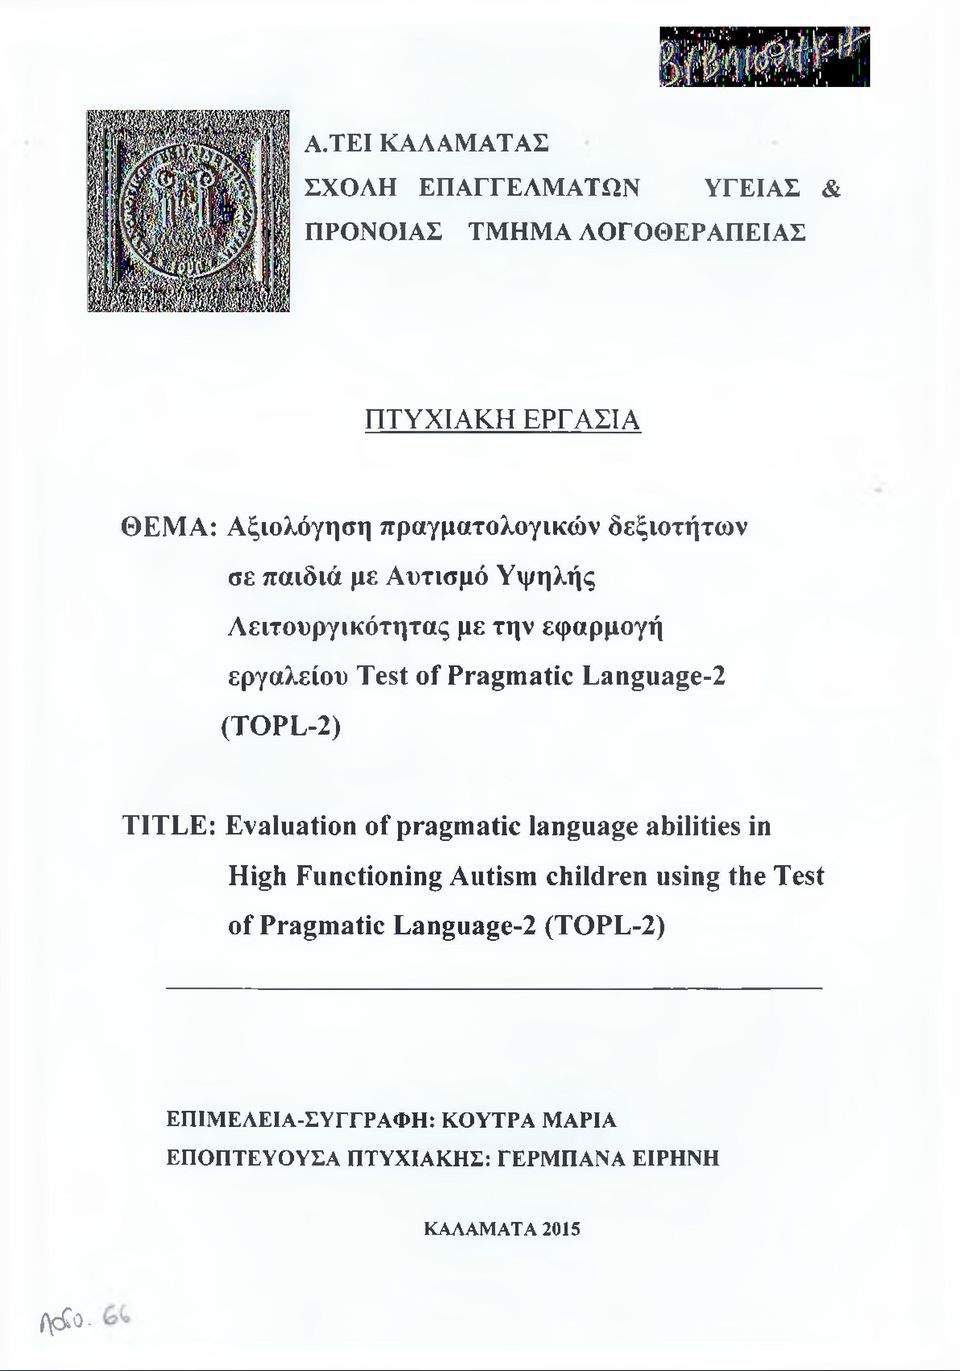 Language-2 (TOPL-2) TITLE: Evaluation of pragmatic language abilities in High Functioning Autism children using the